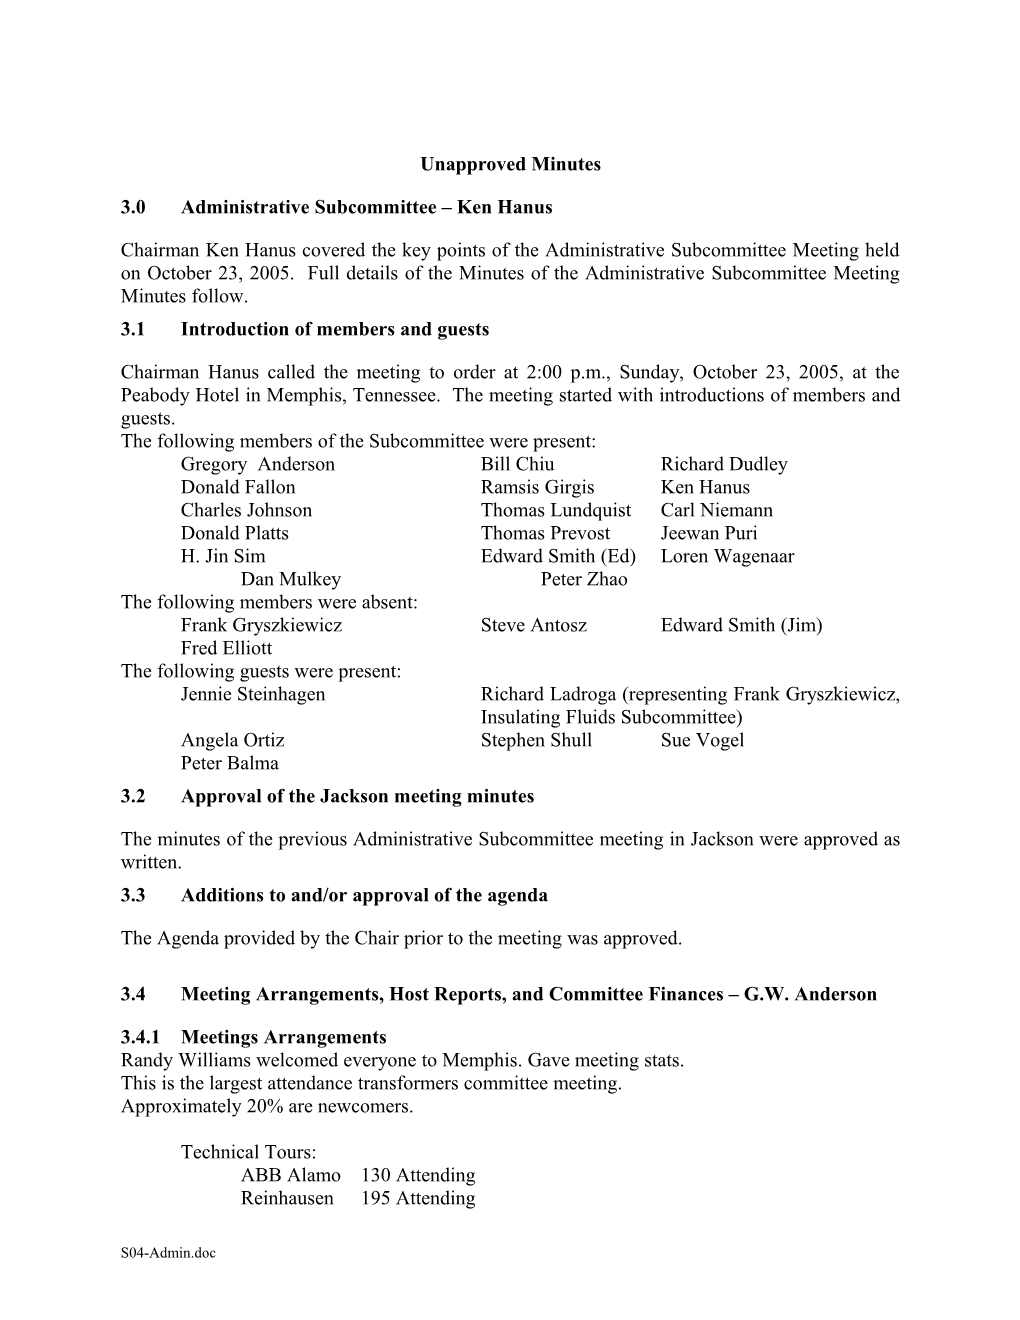 Fall 2003 Administrative SC Minutes